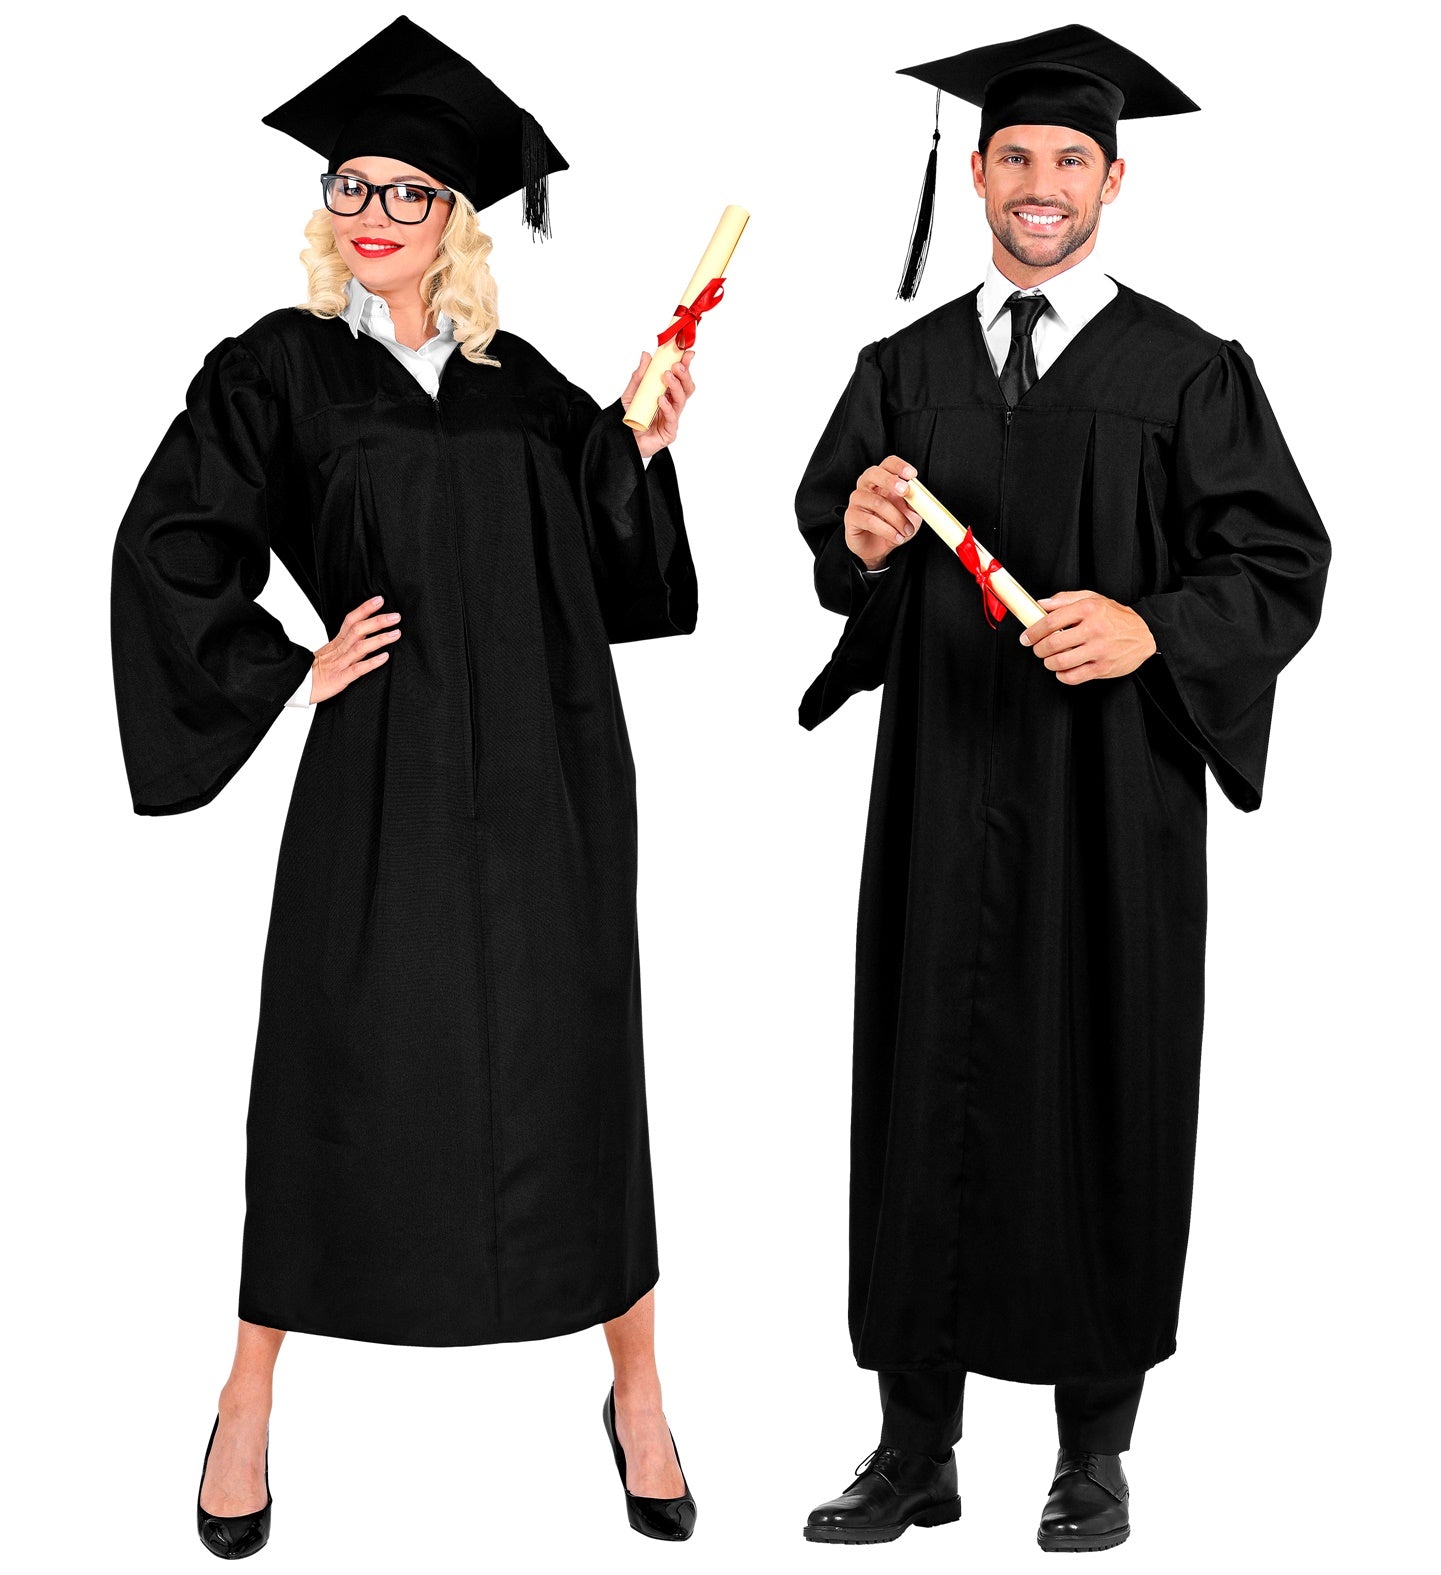 School Graduation Costume